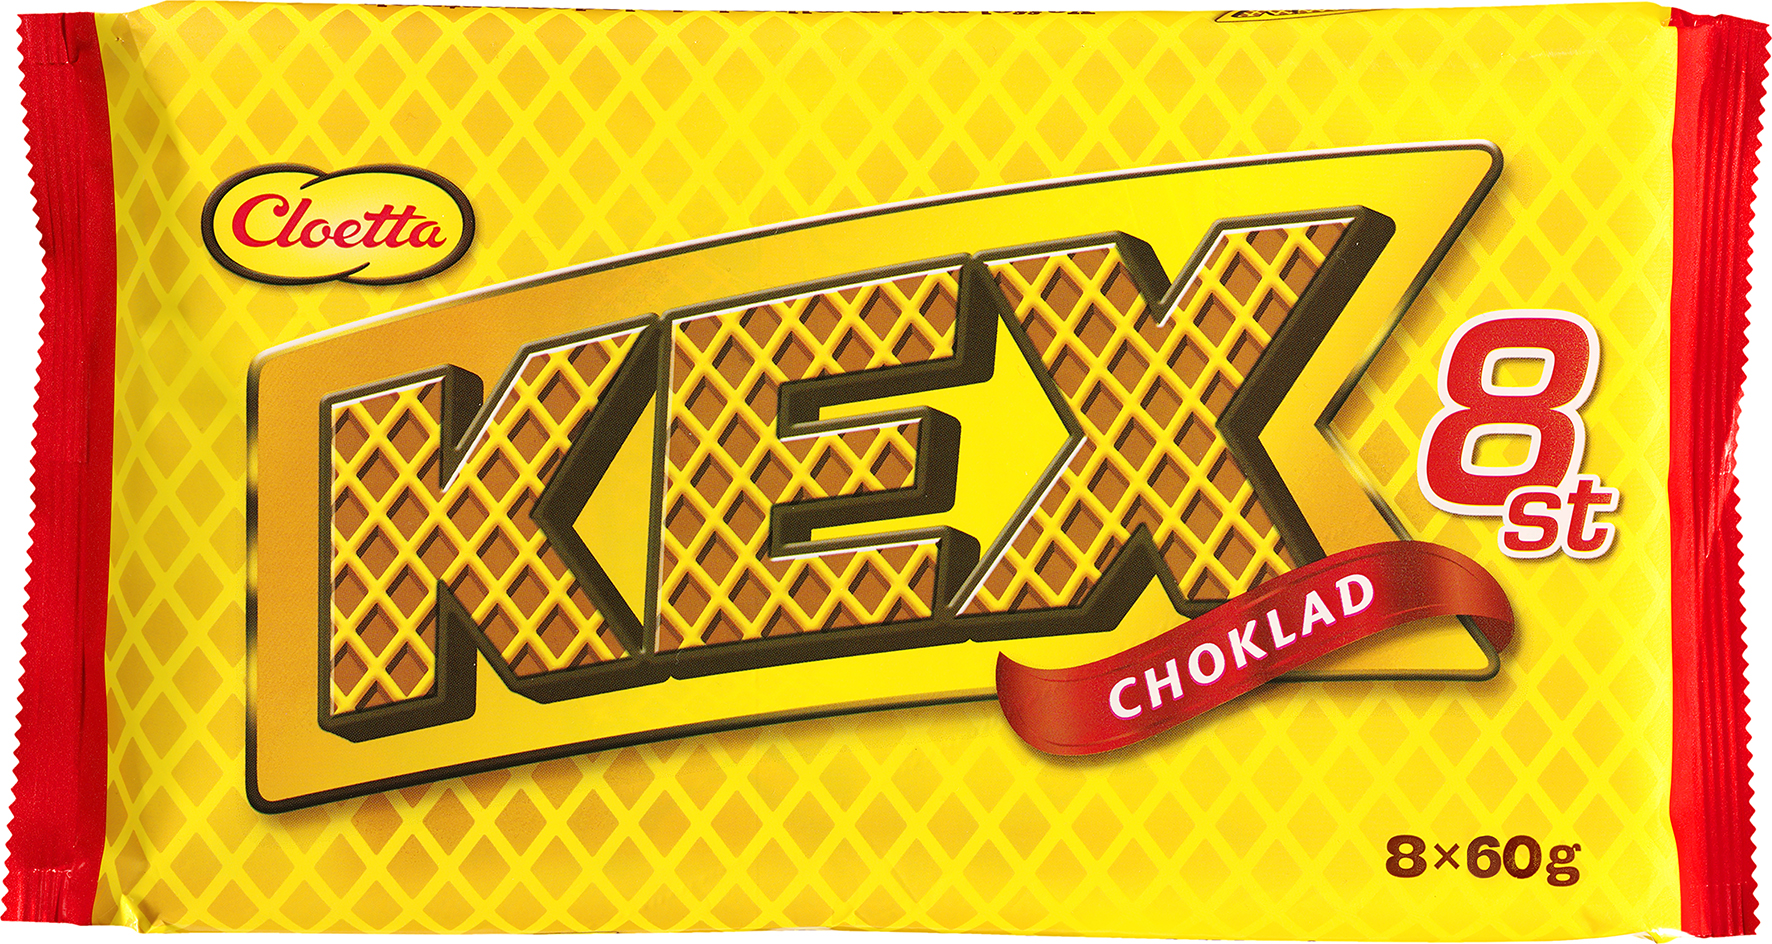 [8550949] Kexchoklad 8-pack